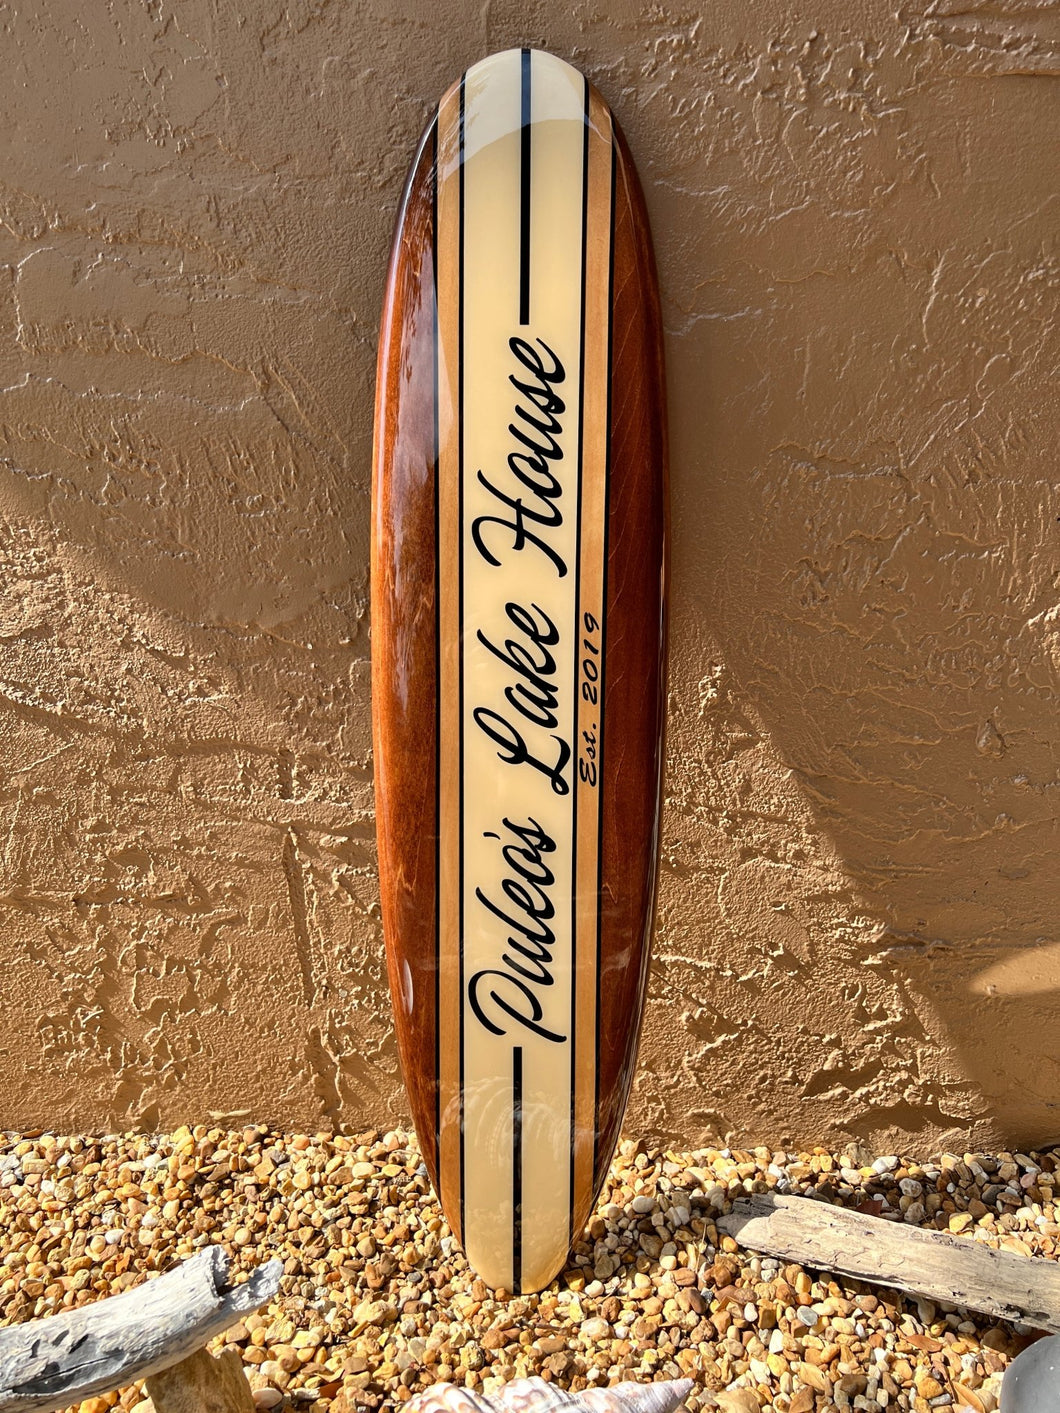 You Name It - Coastal Decor Personalized Surfboard Sign - Tiki Soul Coastal Surfboard Decor